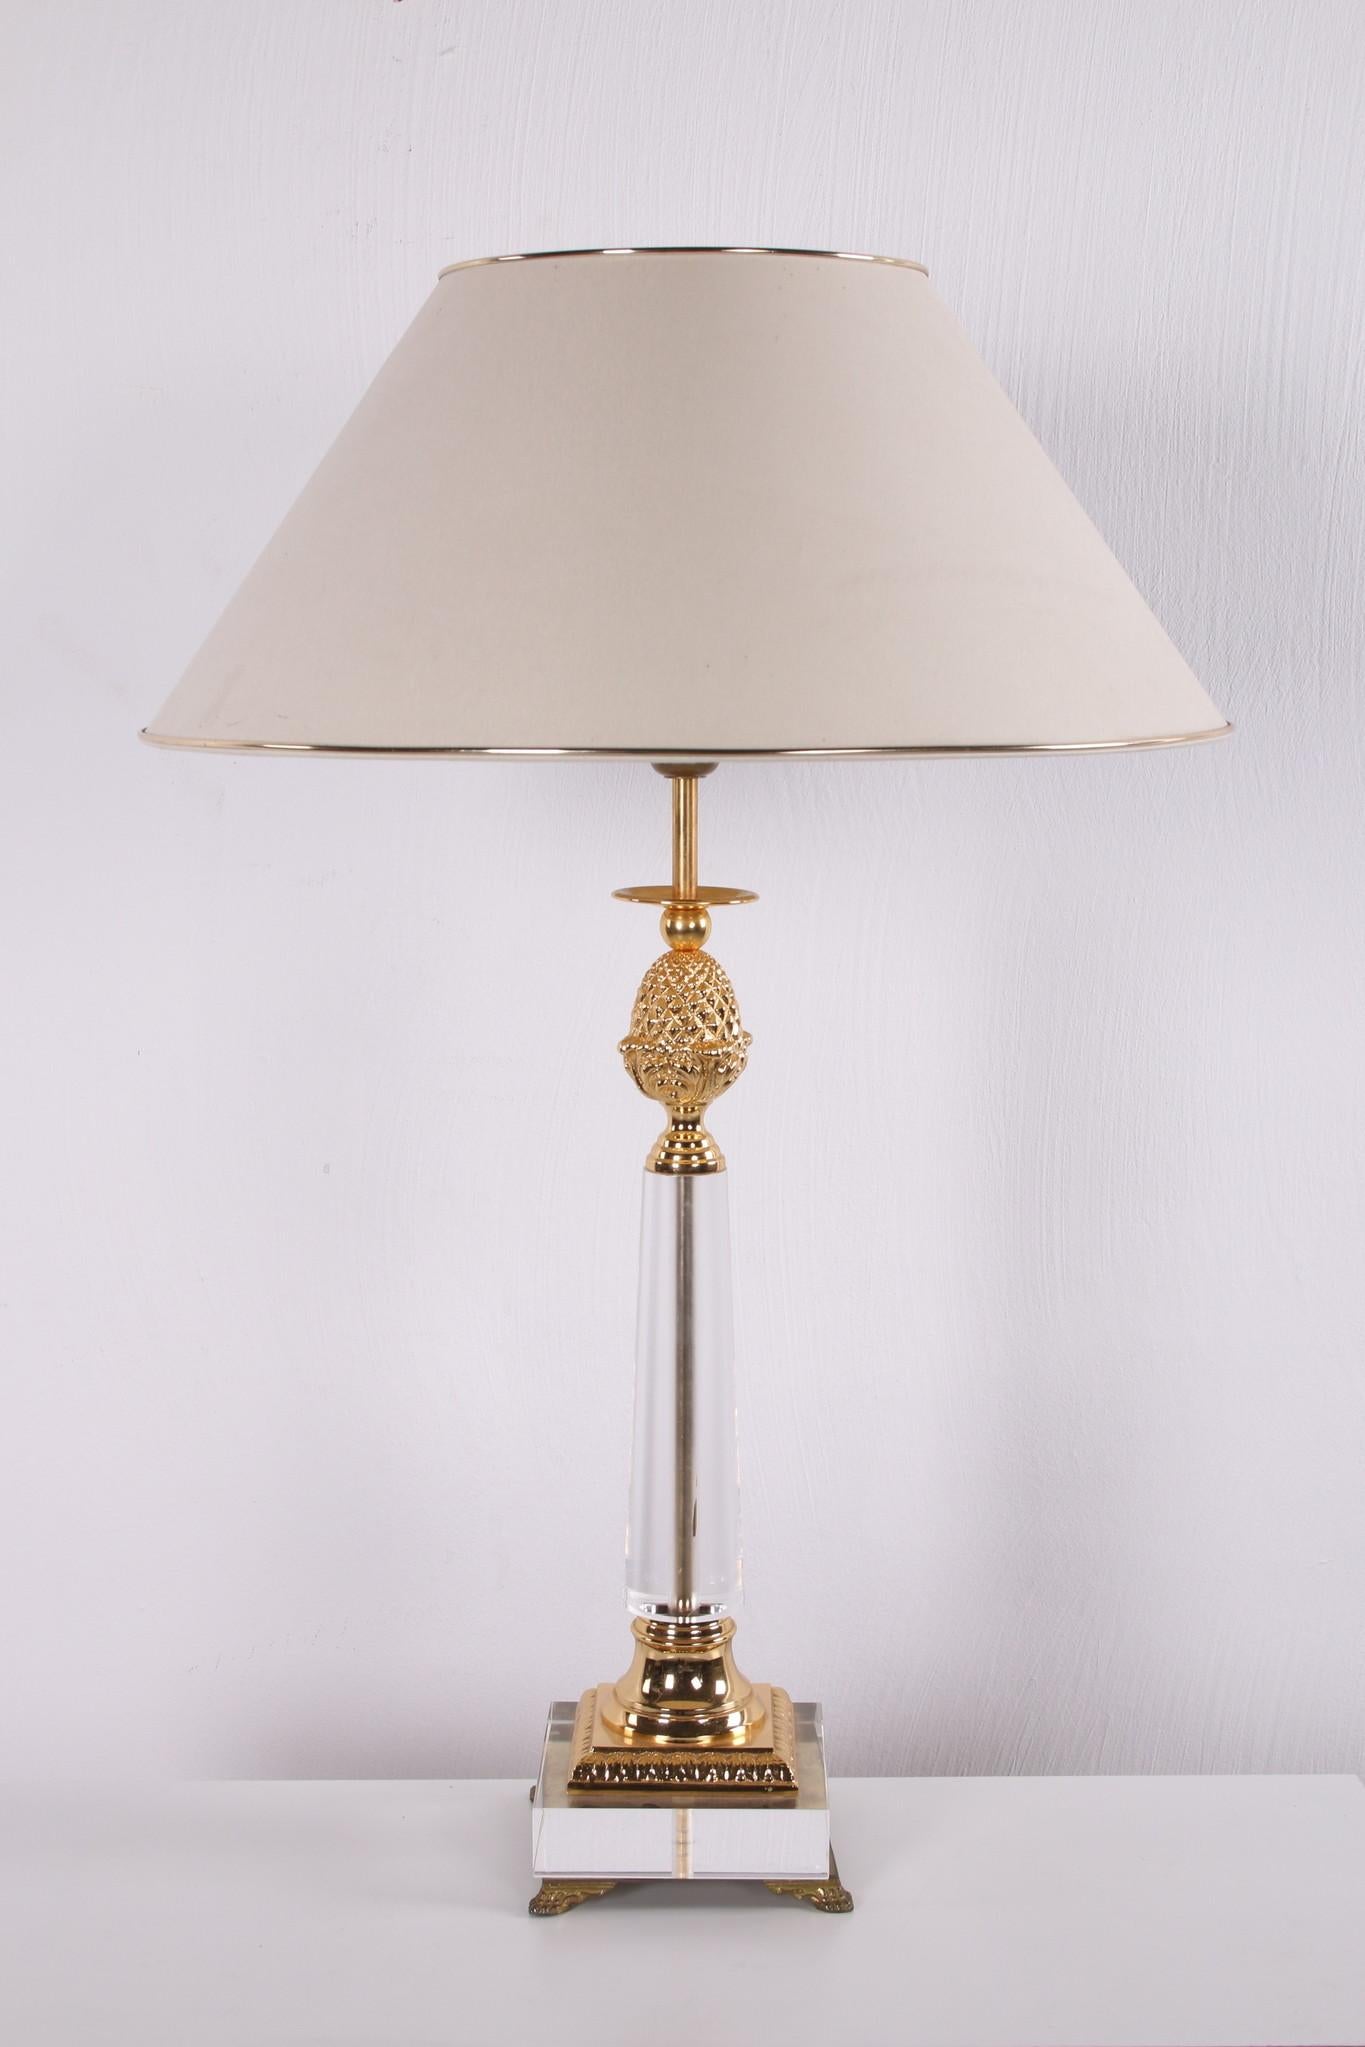 Italian Charles hollis jones Plexiglas Table Lamp with Gold Elements  For Sale